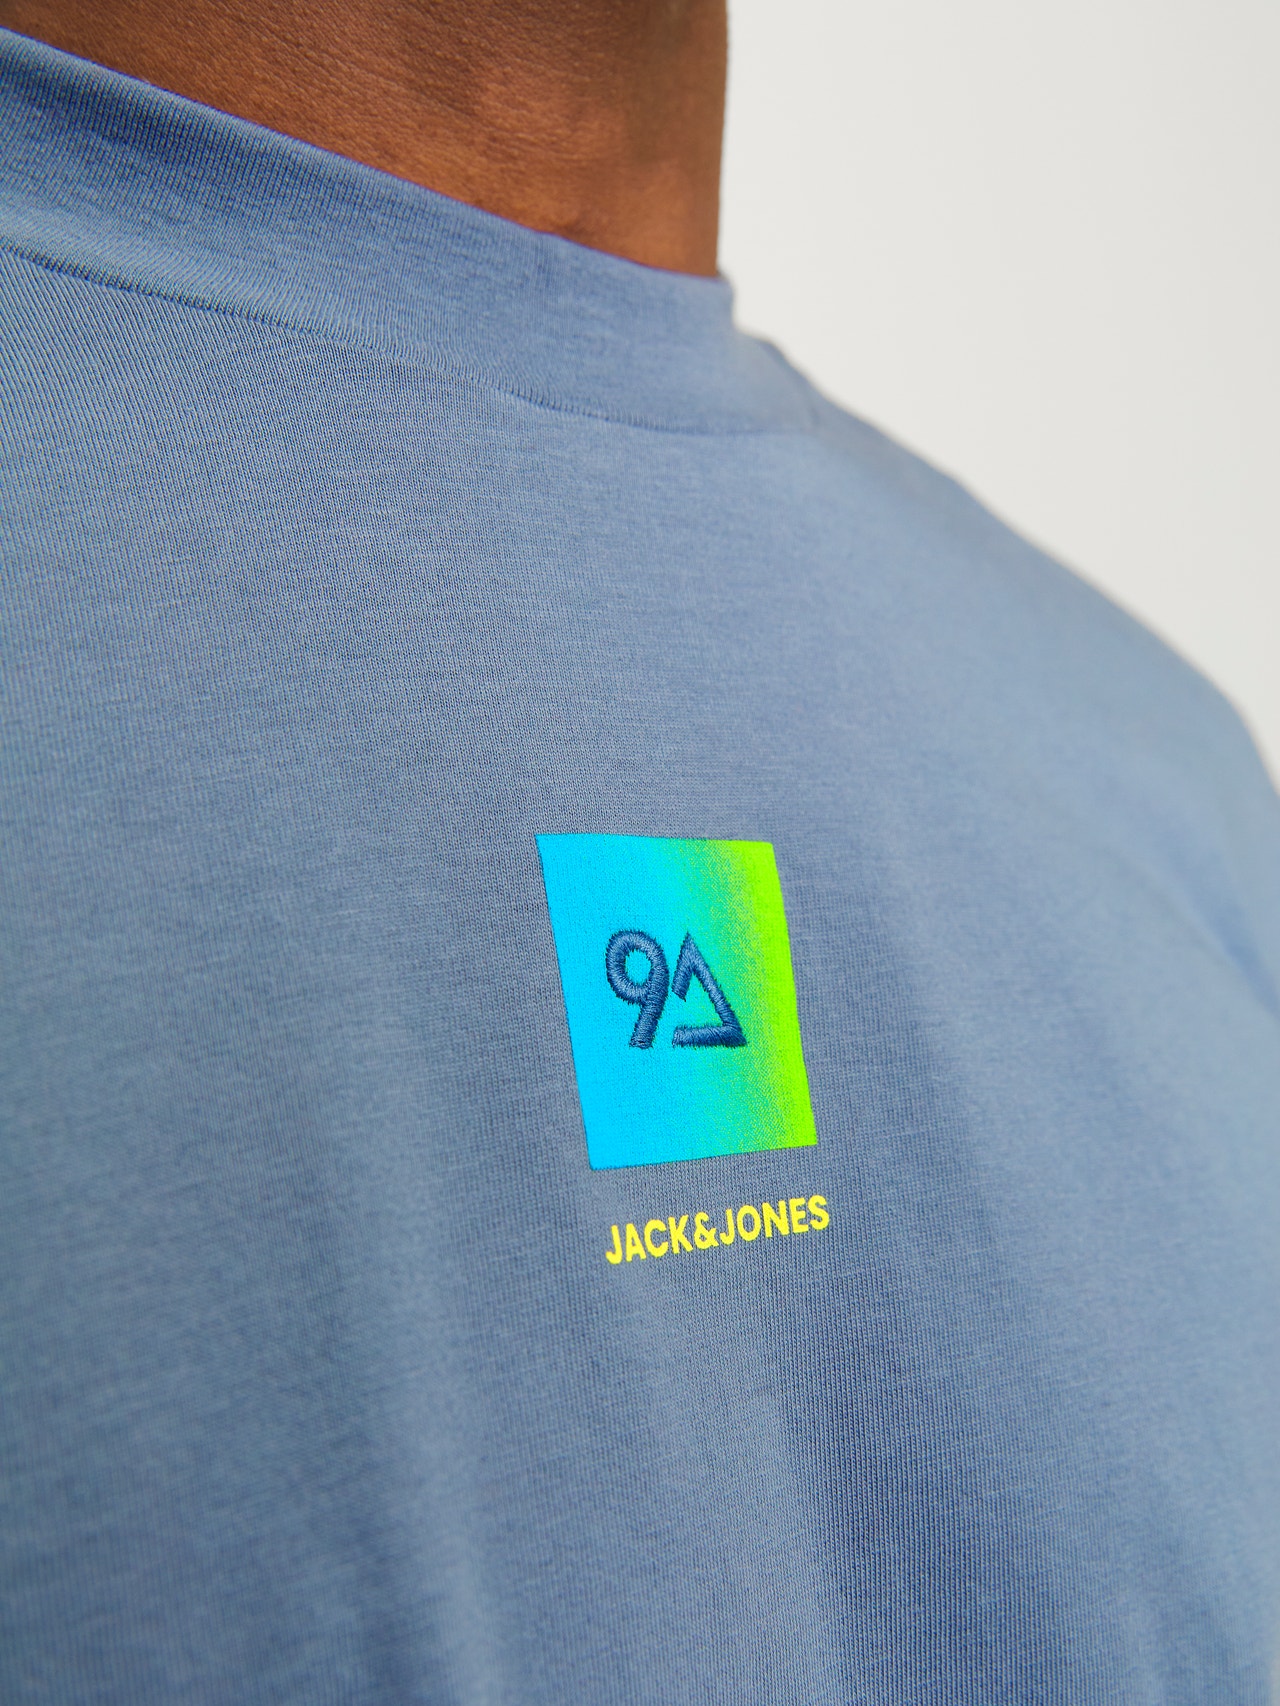 Jack & Jones Camiseta Estampado Cuello redondo -Flint Stone - 12256560